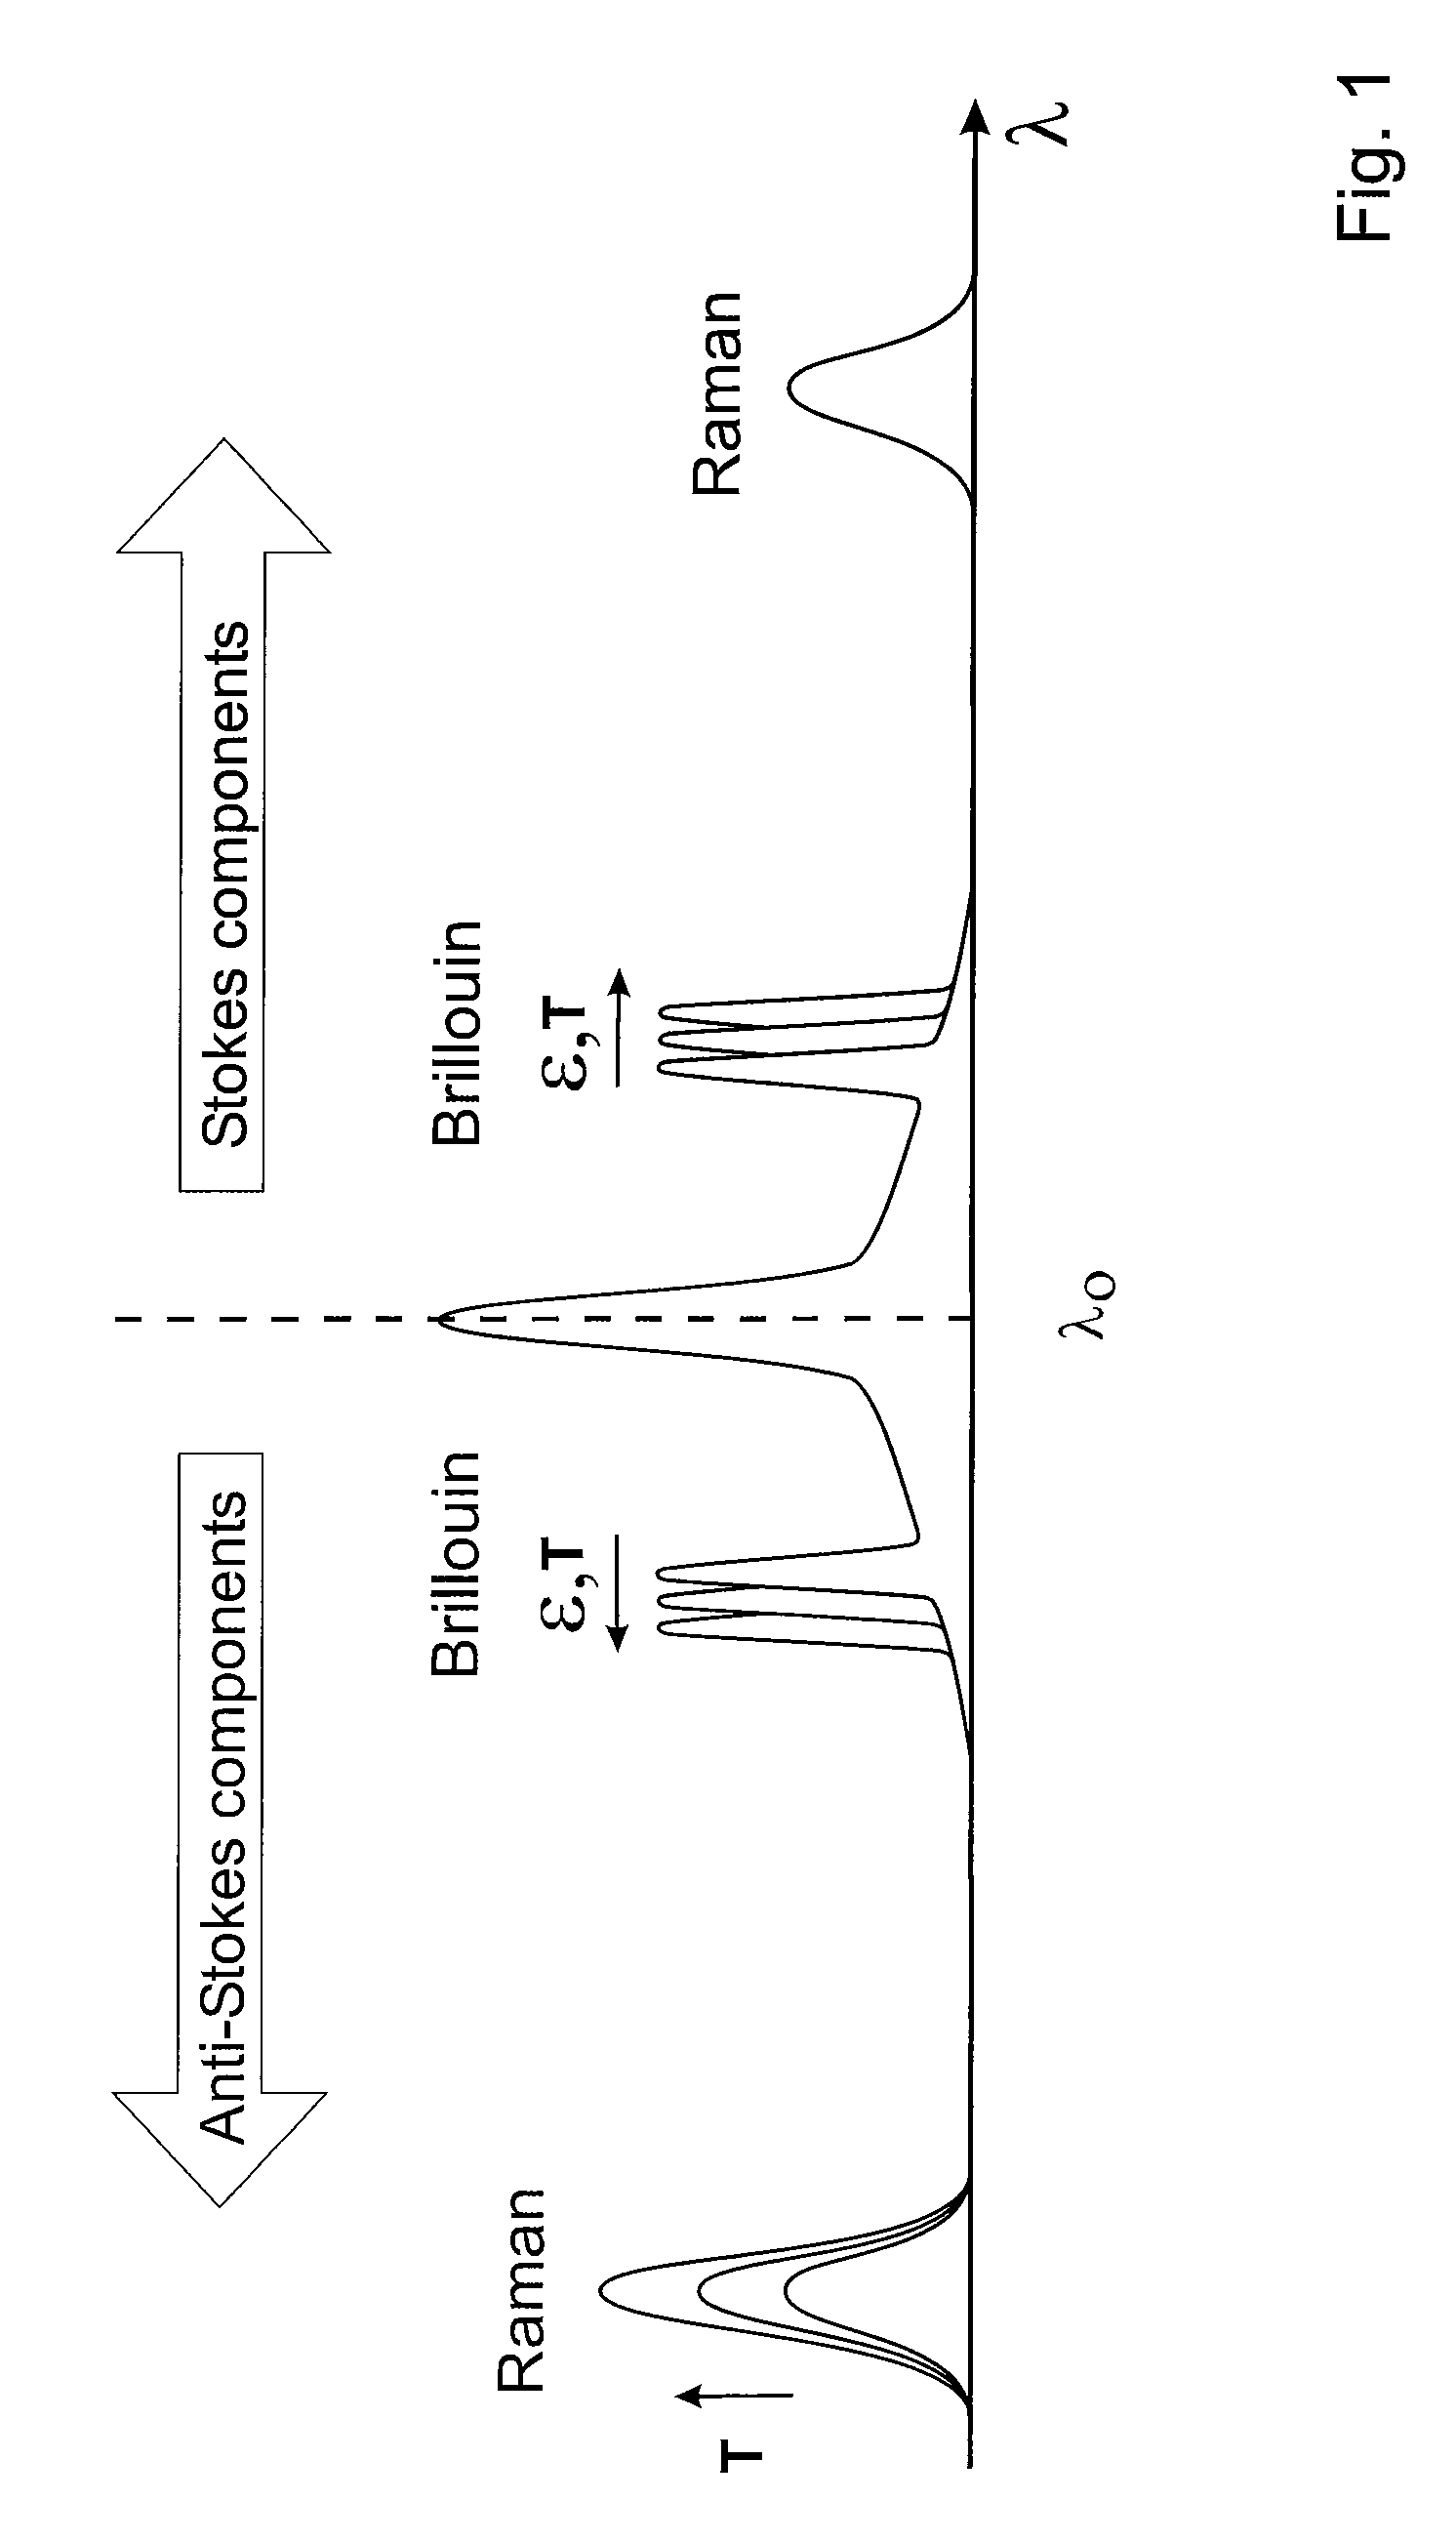 Brillouin optoelectronic measurement method and apparatus